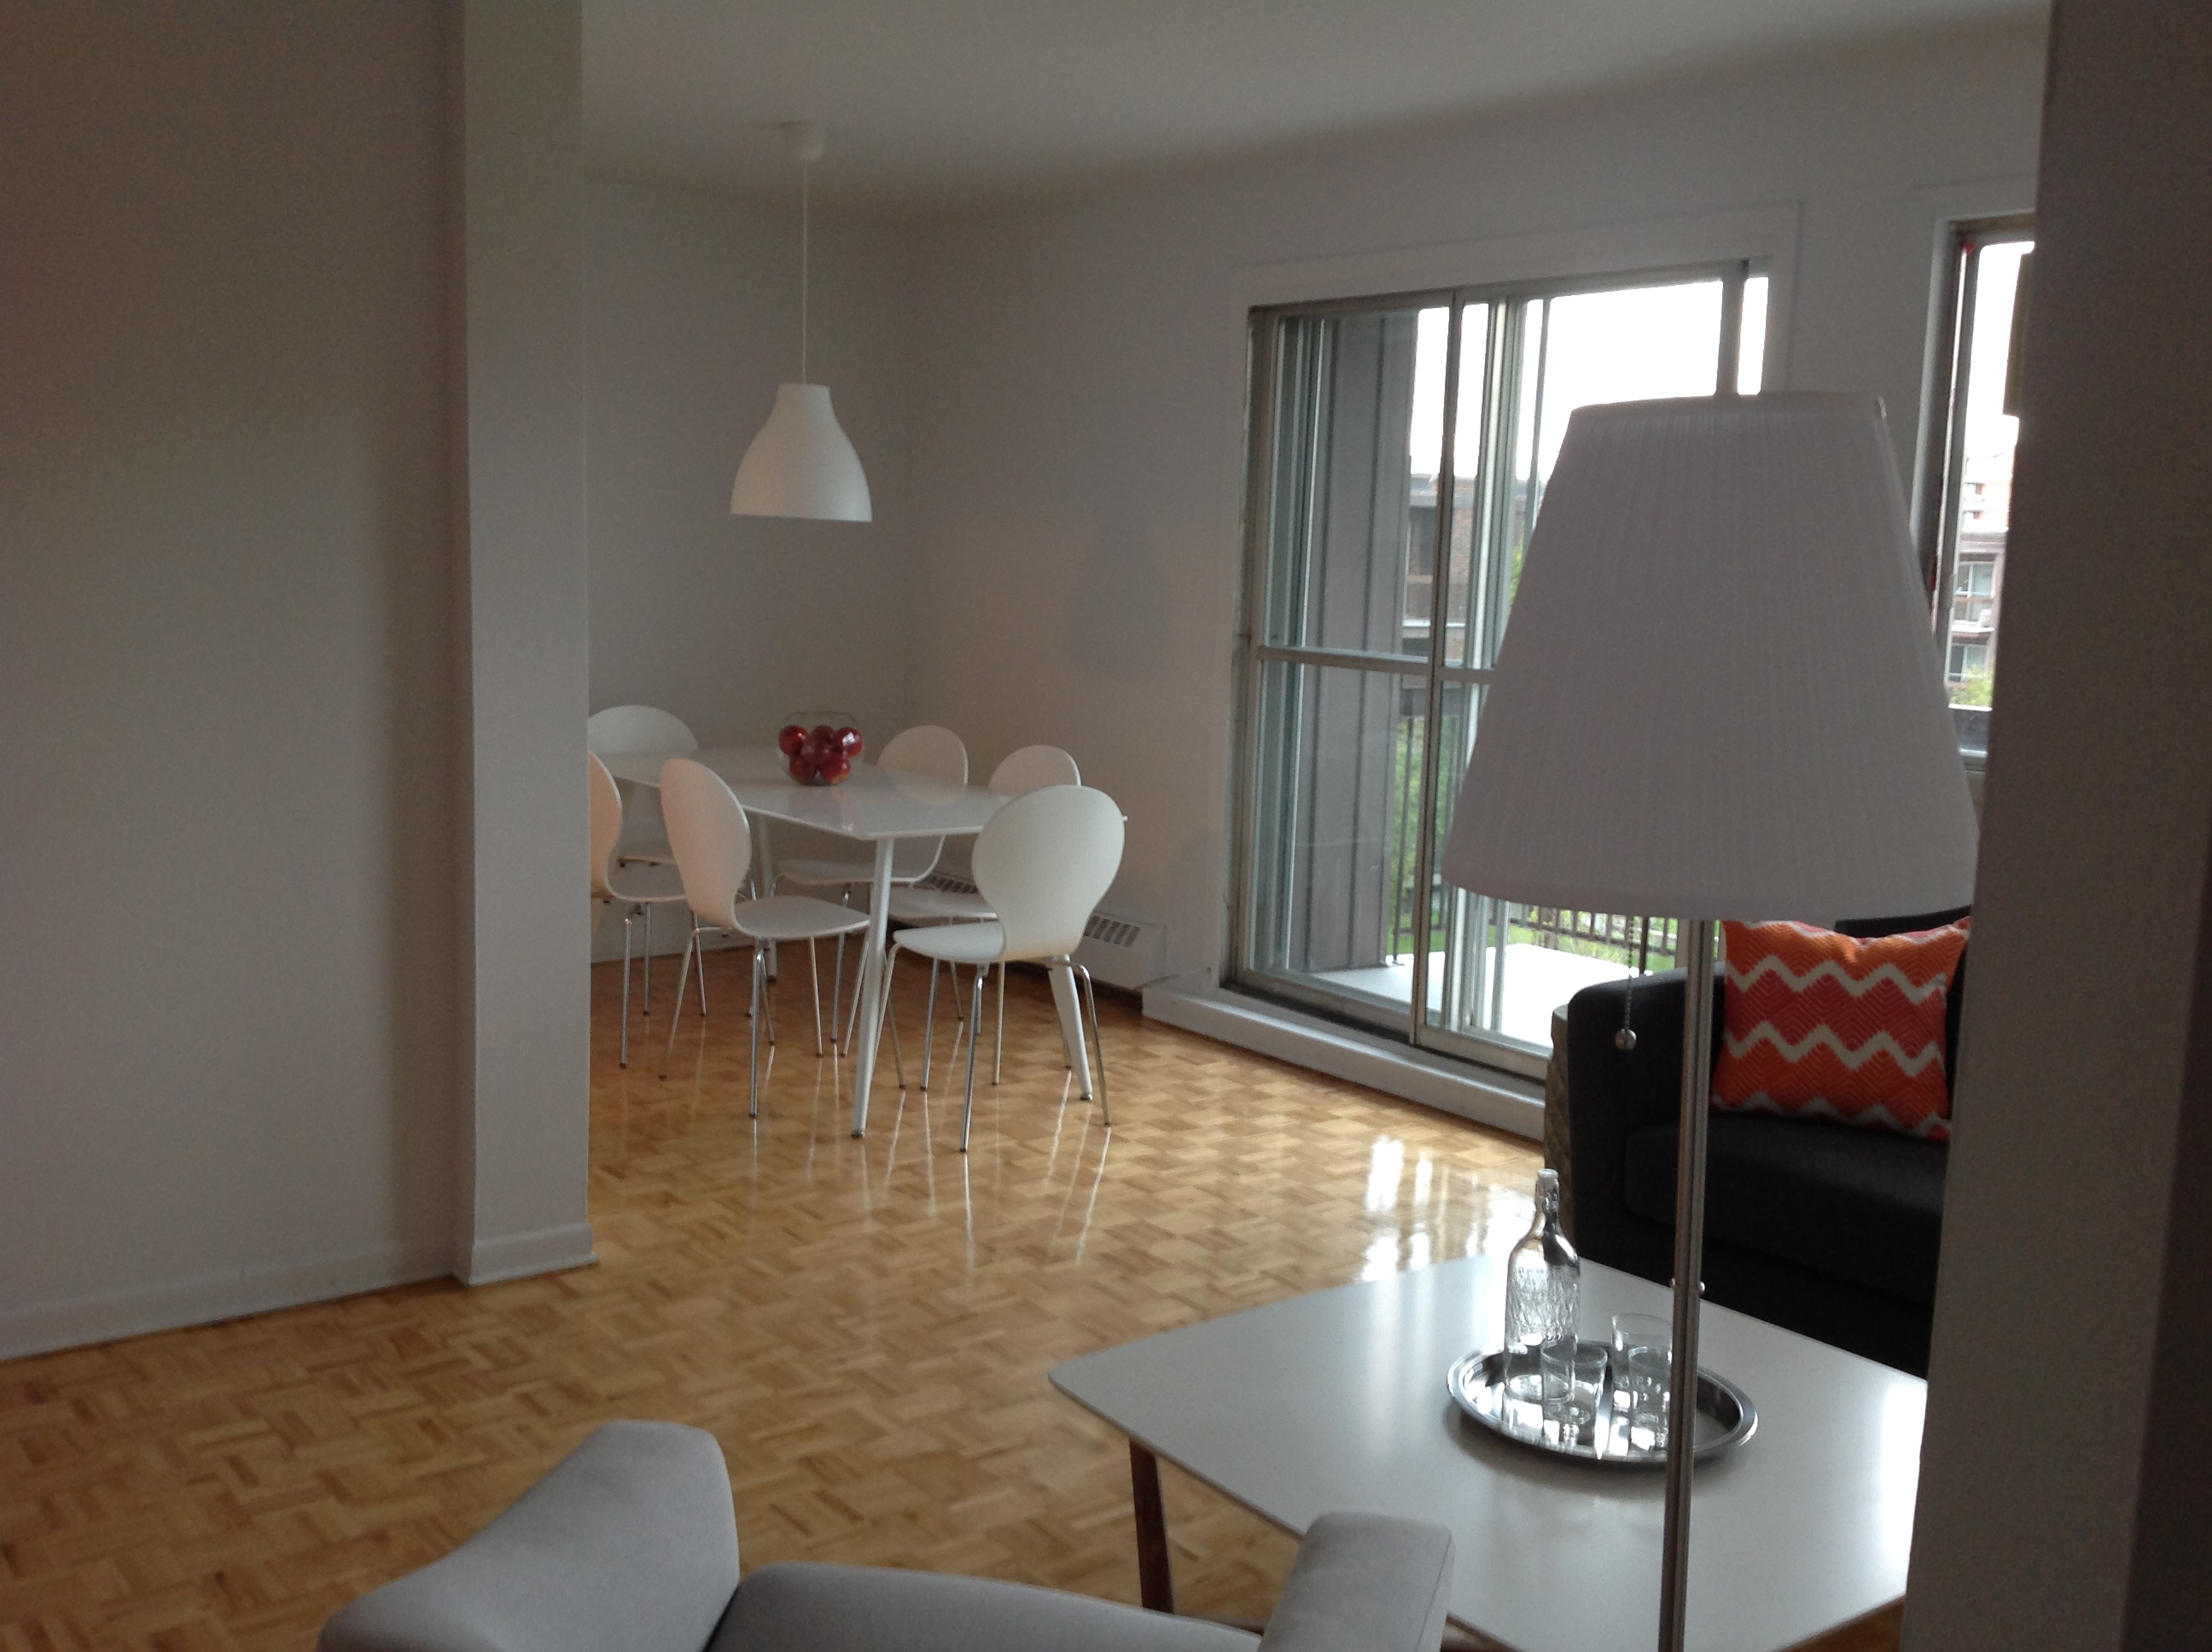 2 bedroom Apartments for rent in Dollard-des-Ormeaux at Place Fairview - Photo 01 - RentQuebecApartments – L404490